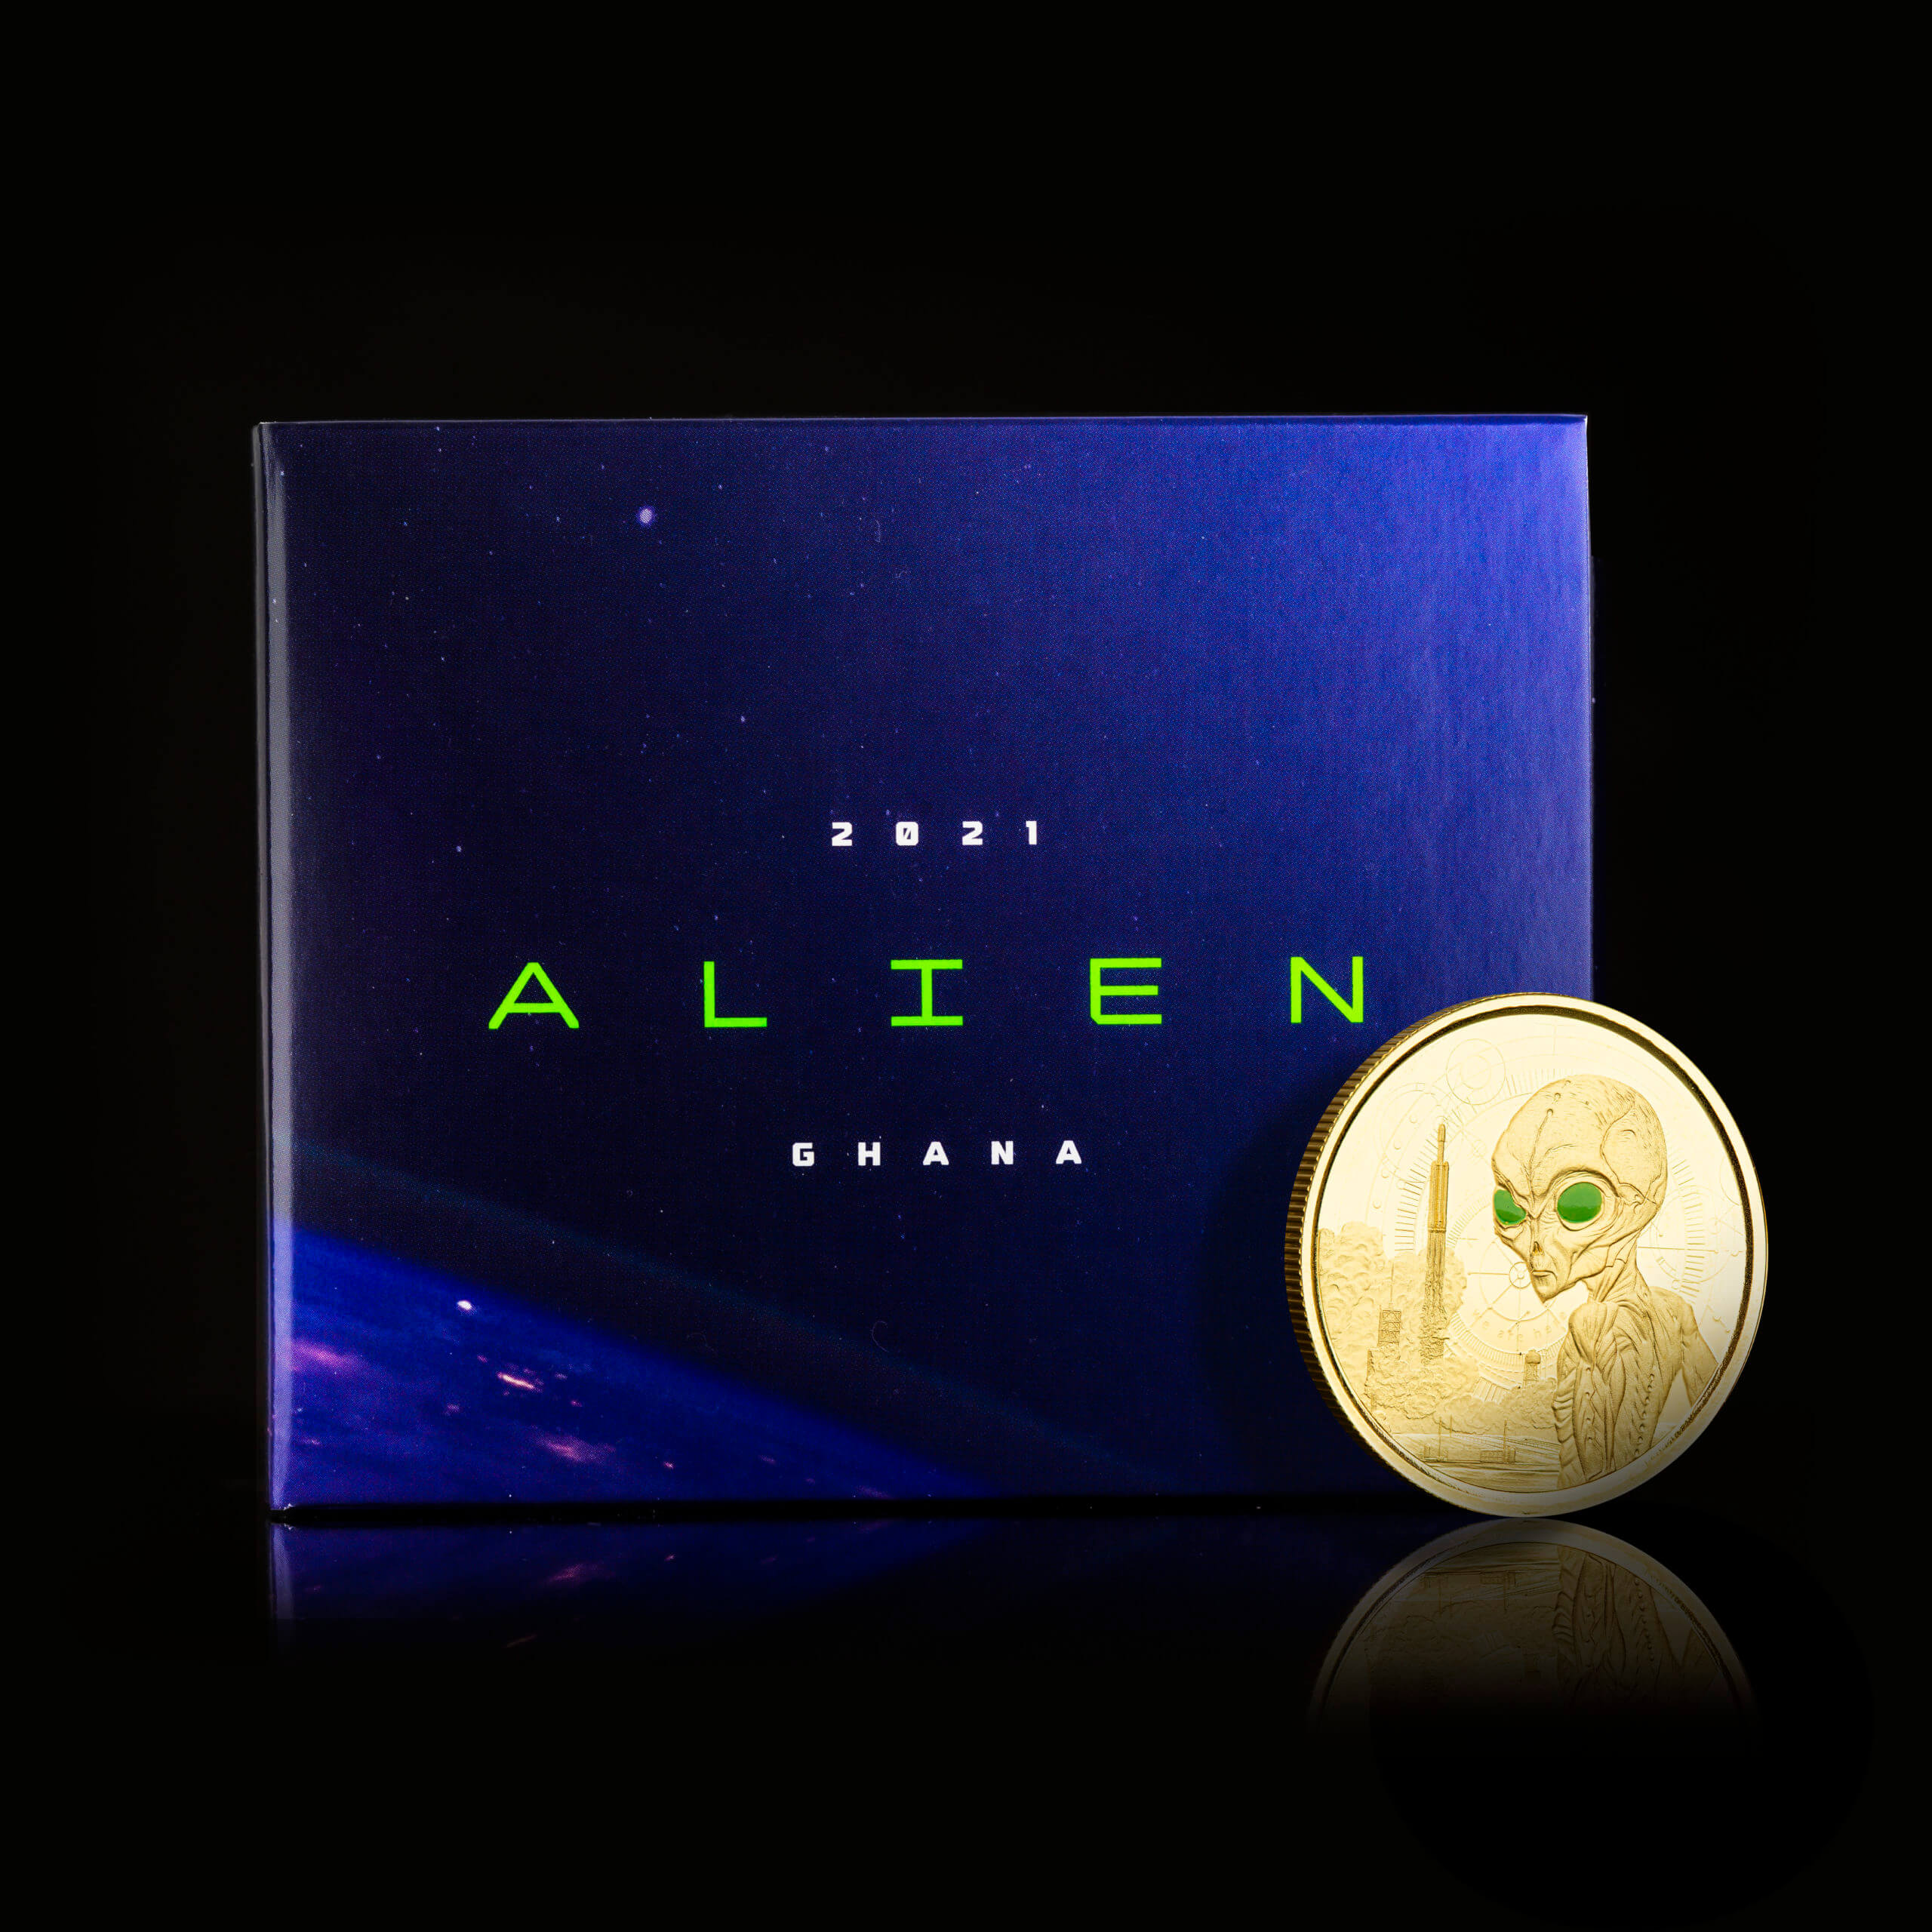 2021 Ghana Alien 1 Oz Silver Black Rhodium With Color Coin